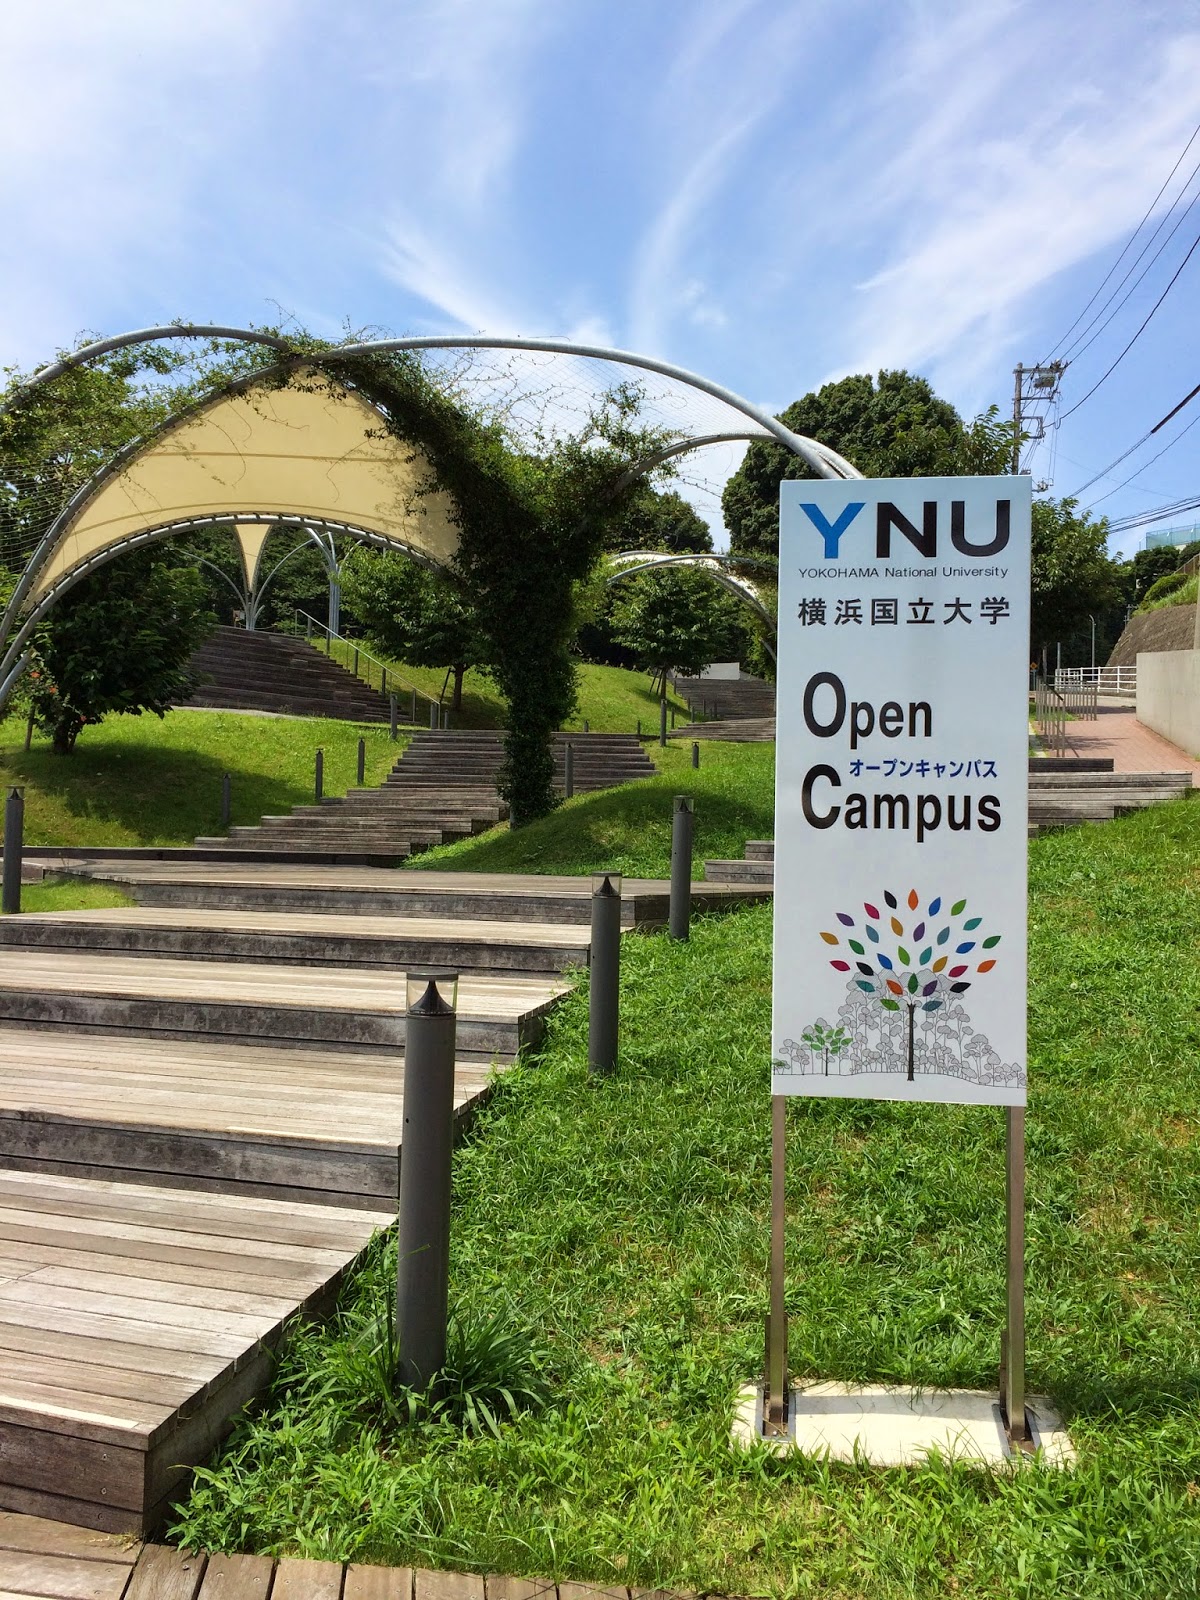 Iesa Staff Naoko S Blog 横浜国立大学オープンキャンパス